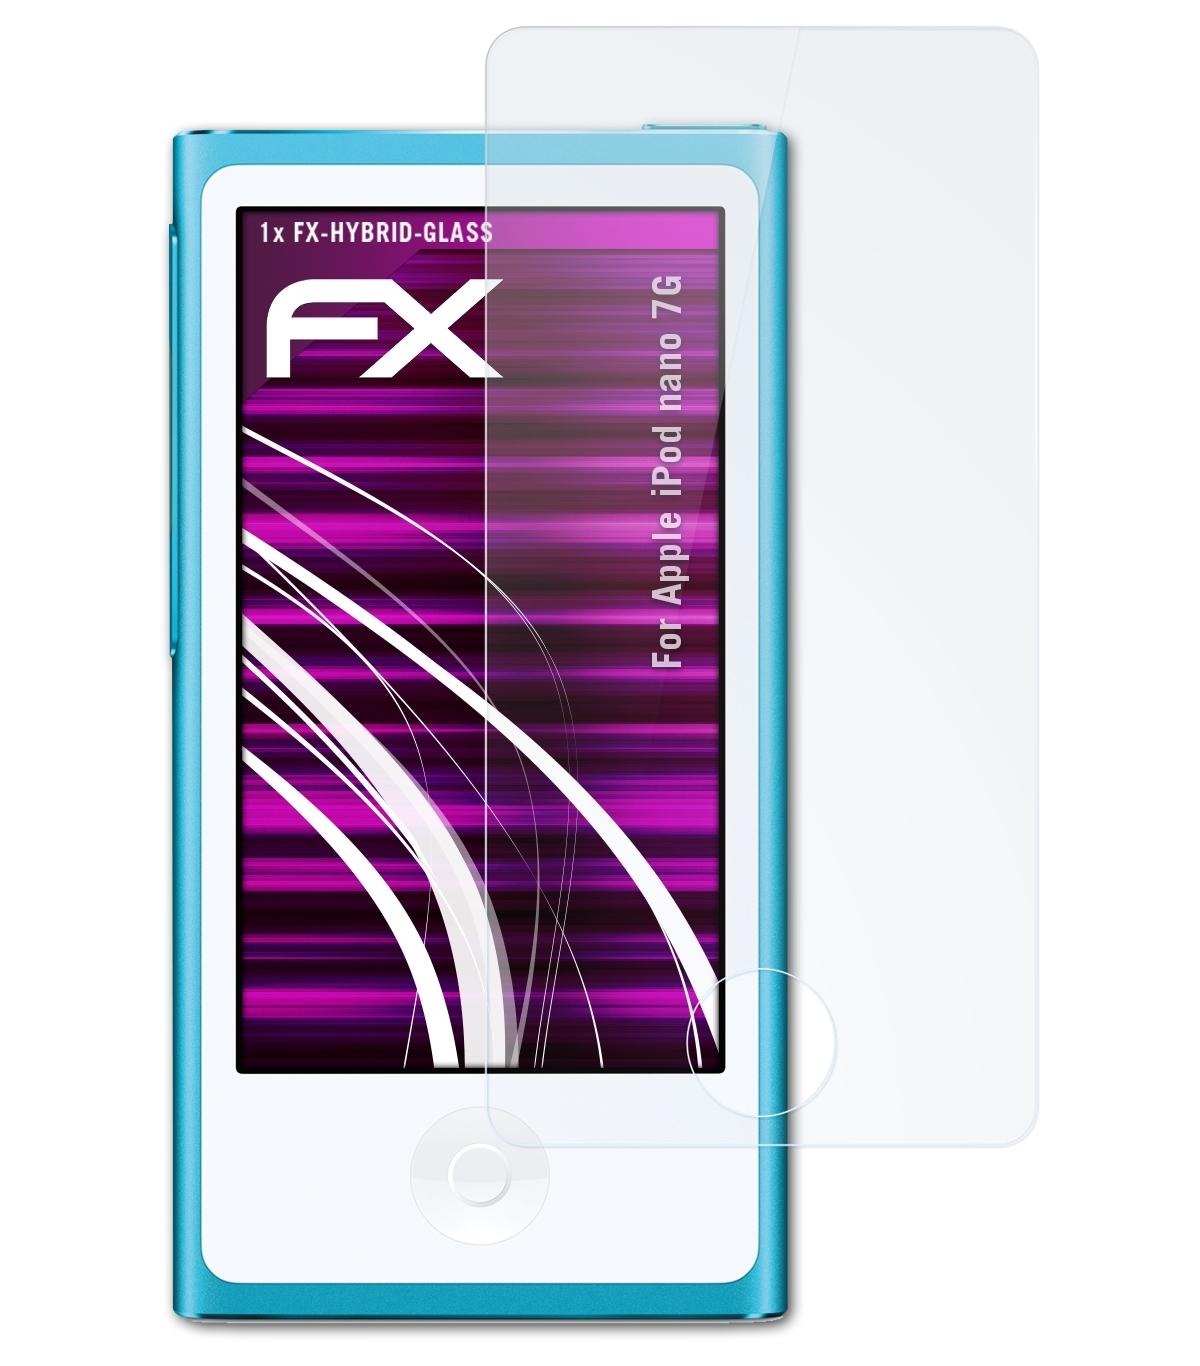 ATFOLIX 7G) nano Apple Schutzglas(für FX-Hybrid-Glass iPod